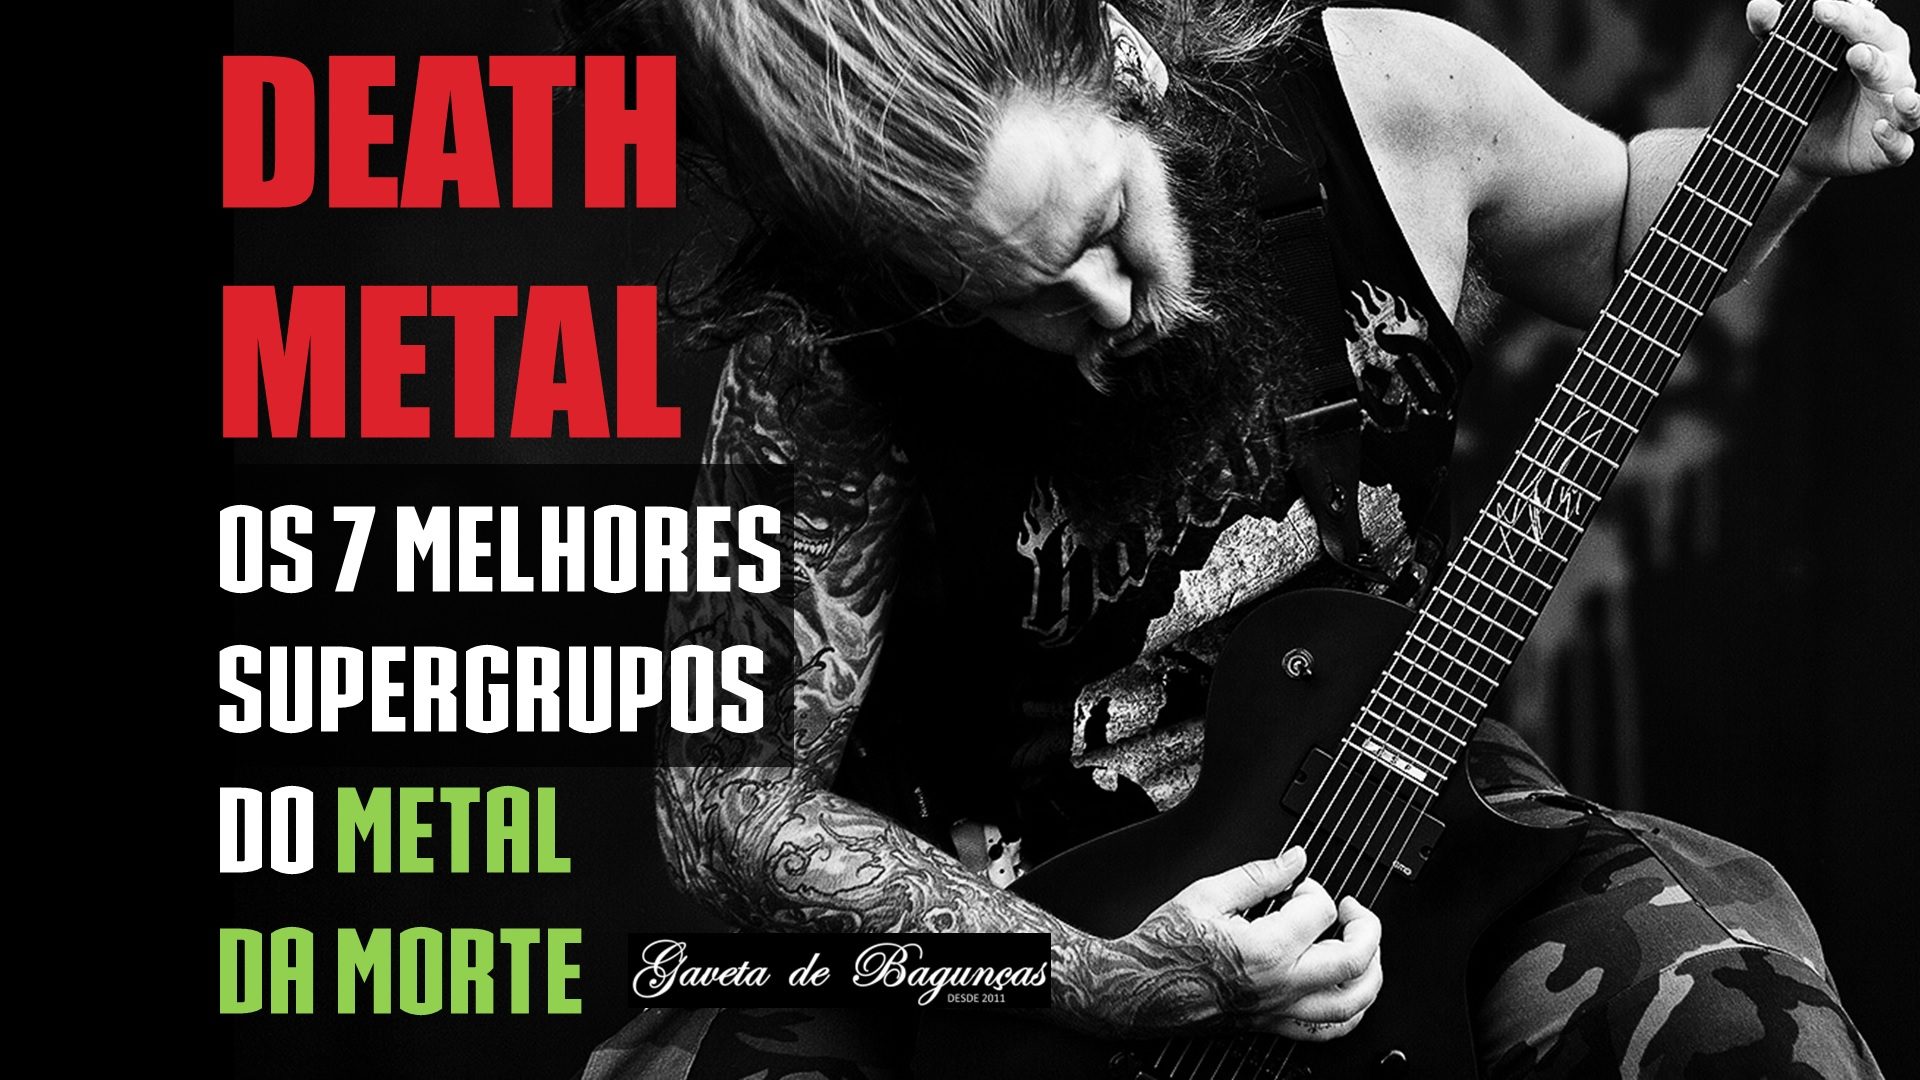 Supergrupos do Death Metal Bloodbath Brujeria Lock Up Heavy Metal Rock da Morte Sinsaenum Memoriam Vltimas Six Feet Under